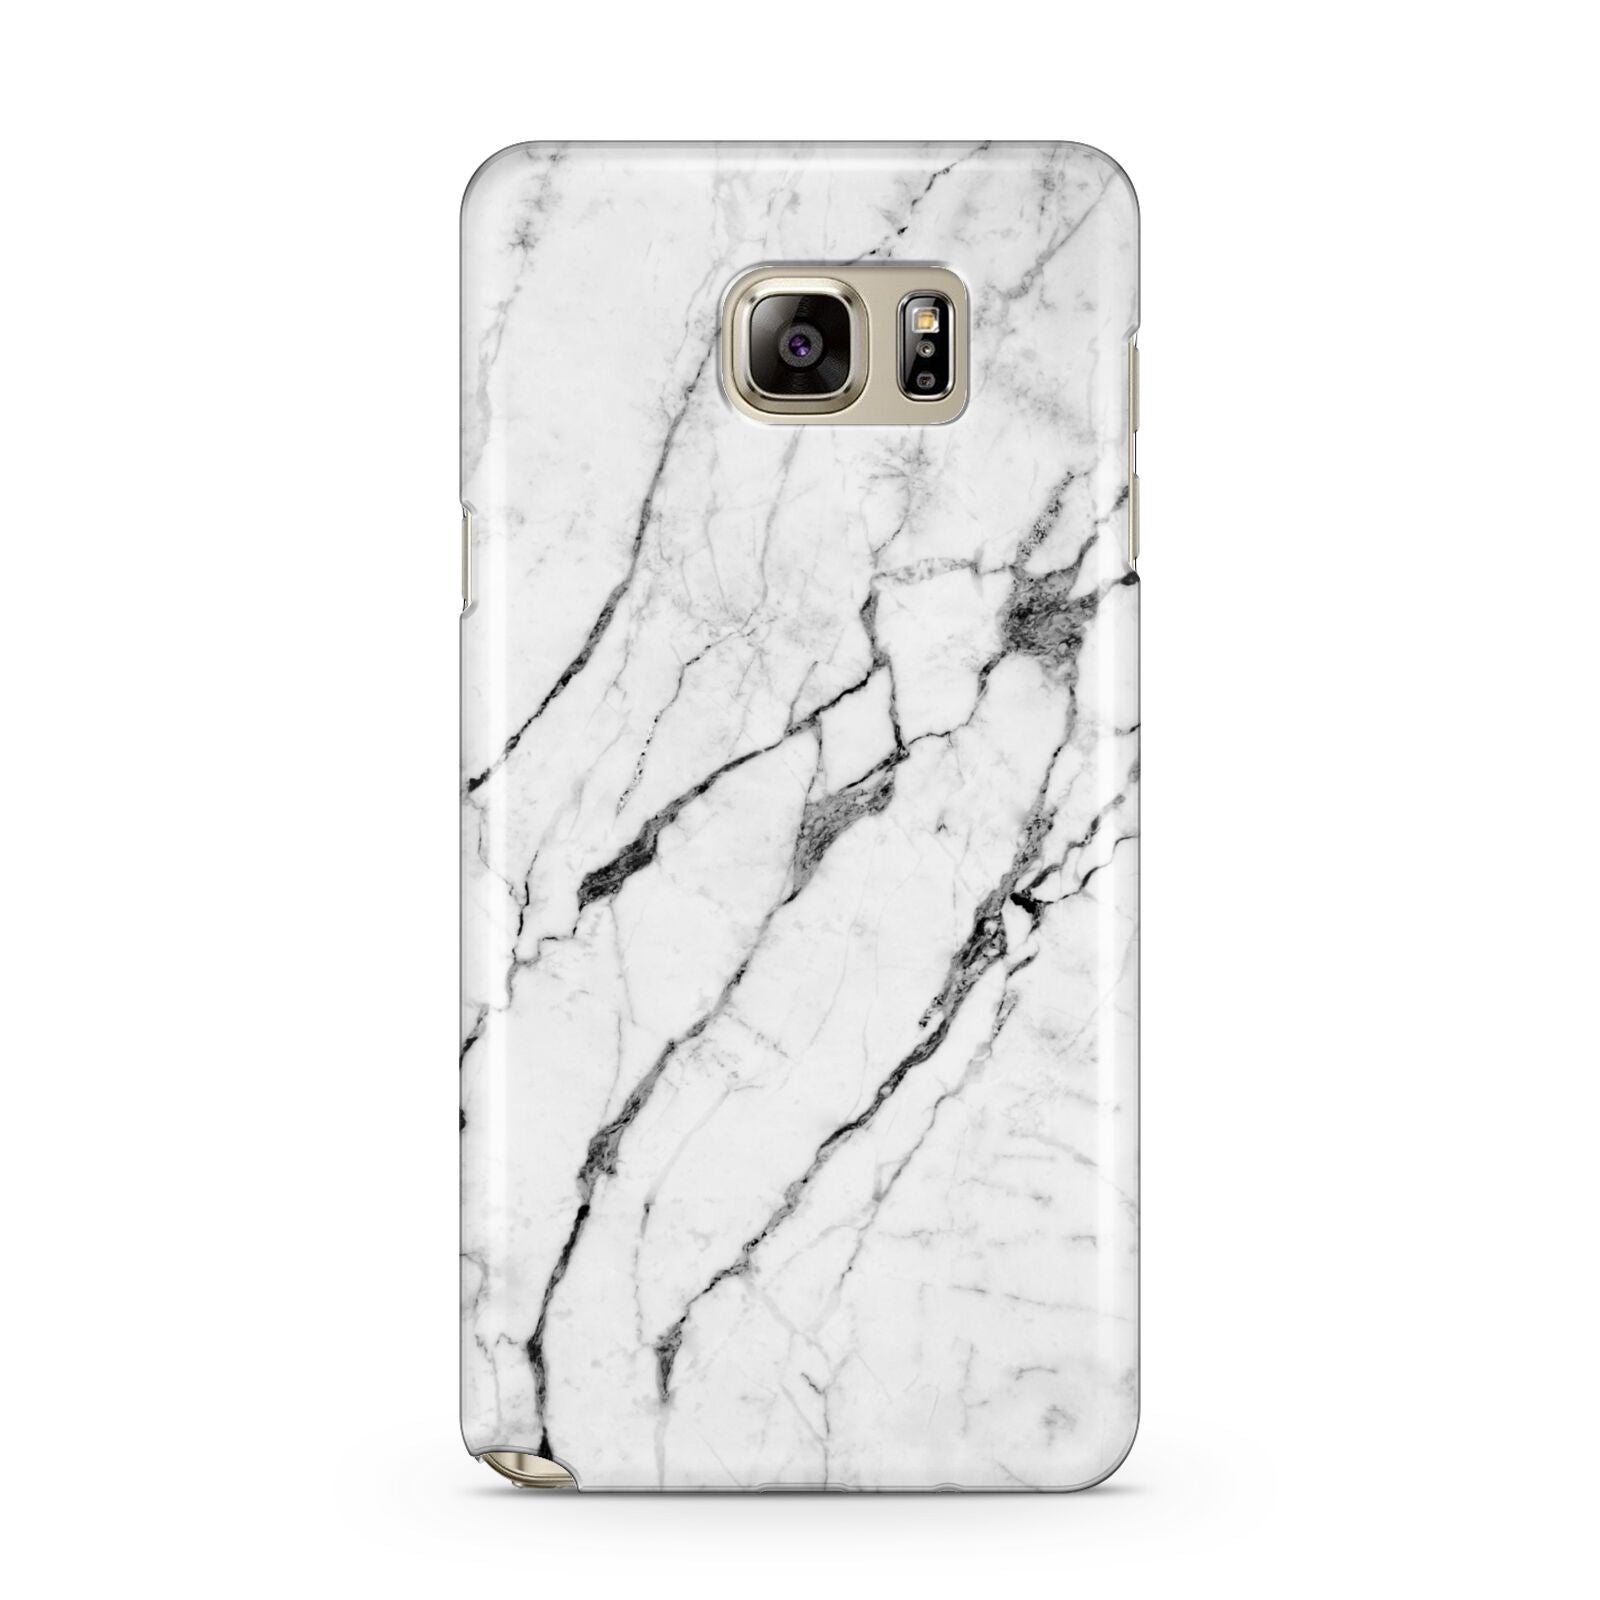 Marble White Samsung Galaxy Note 5 Case